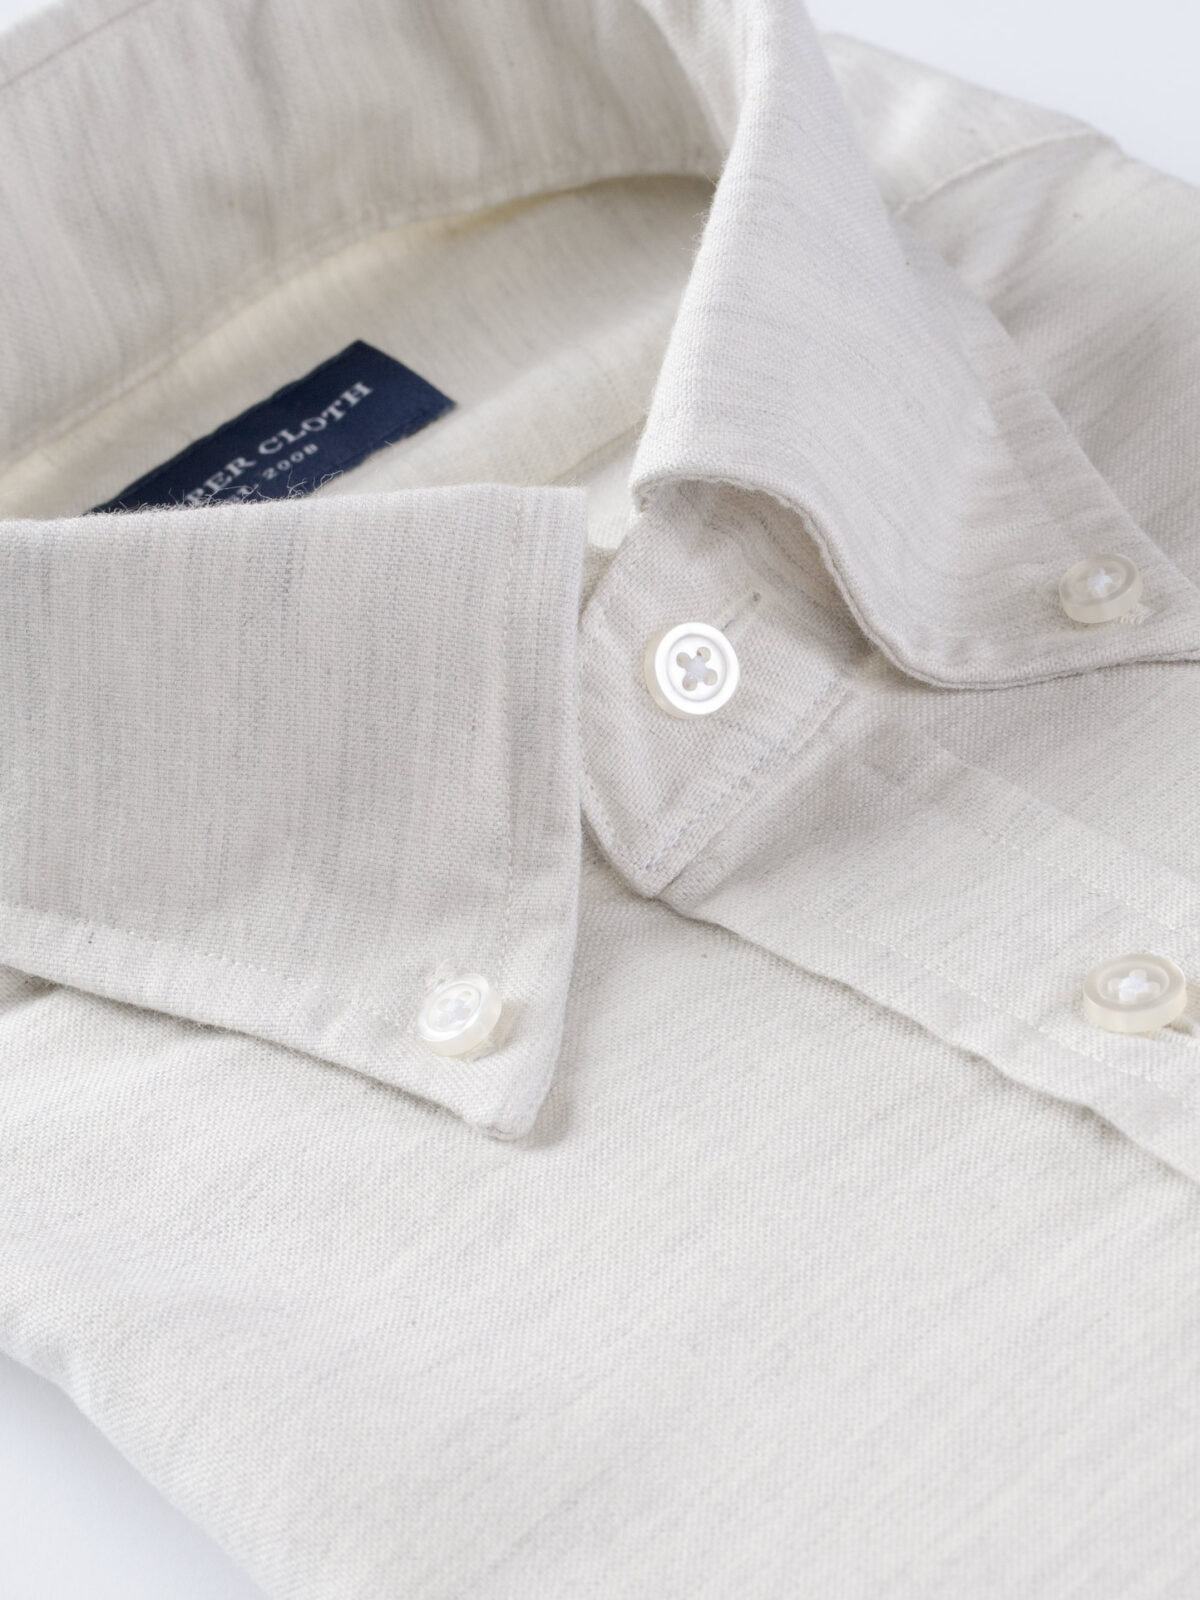 Japanese Cream Melange Organic Cotton Oxford Shirt by Proper Cloth